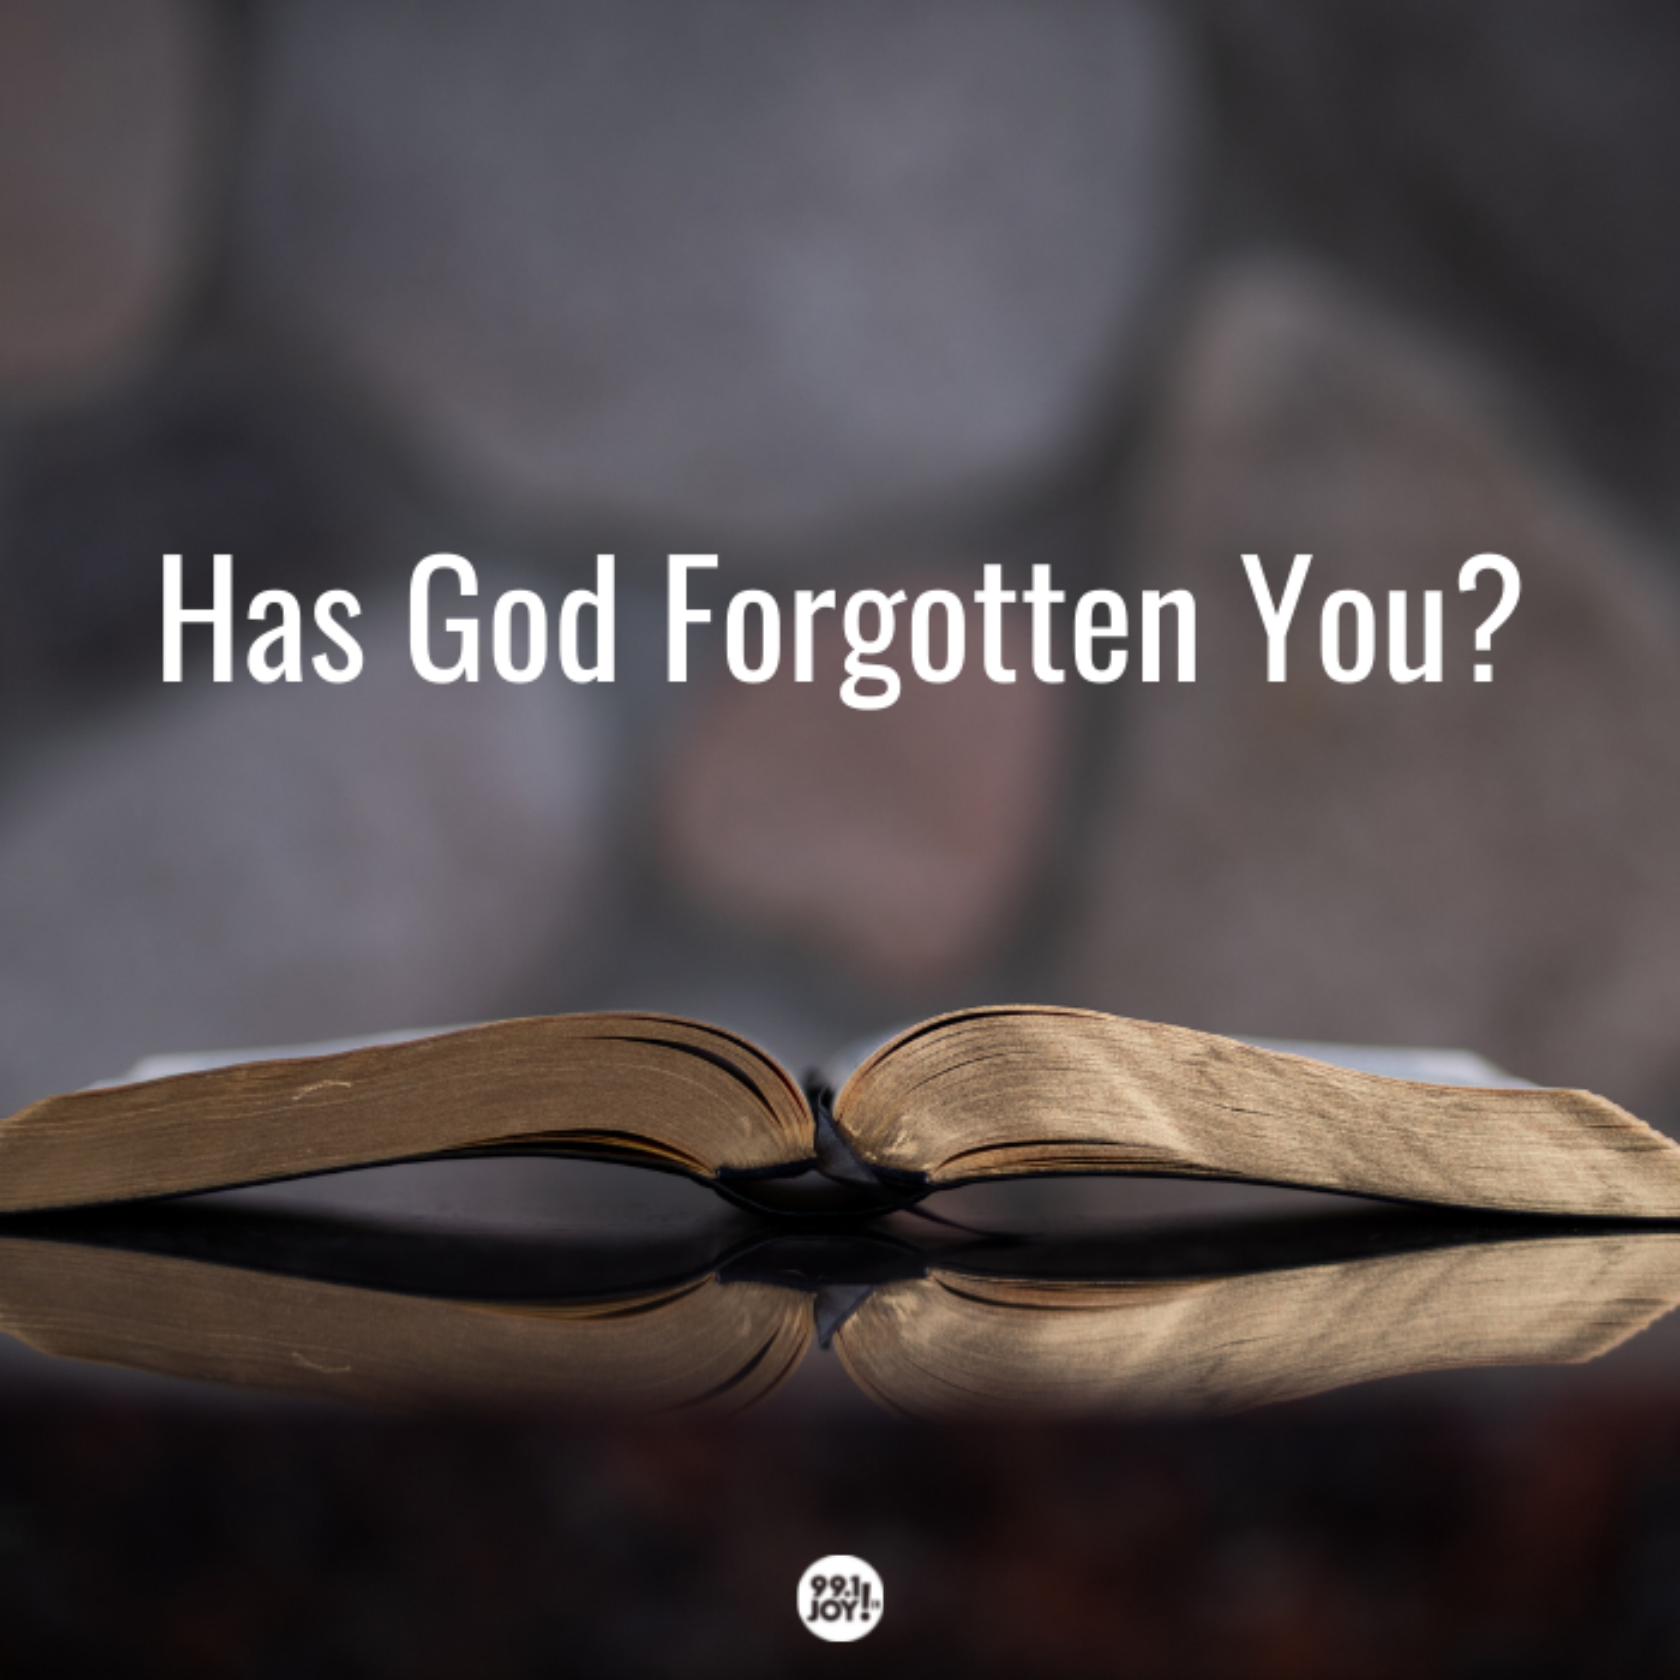 Has God Forgotten You?